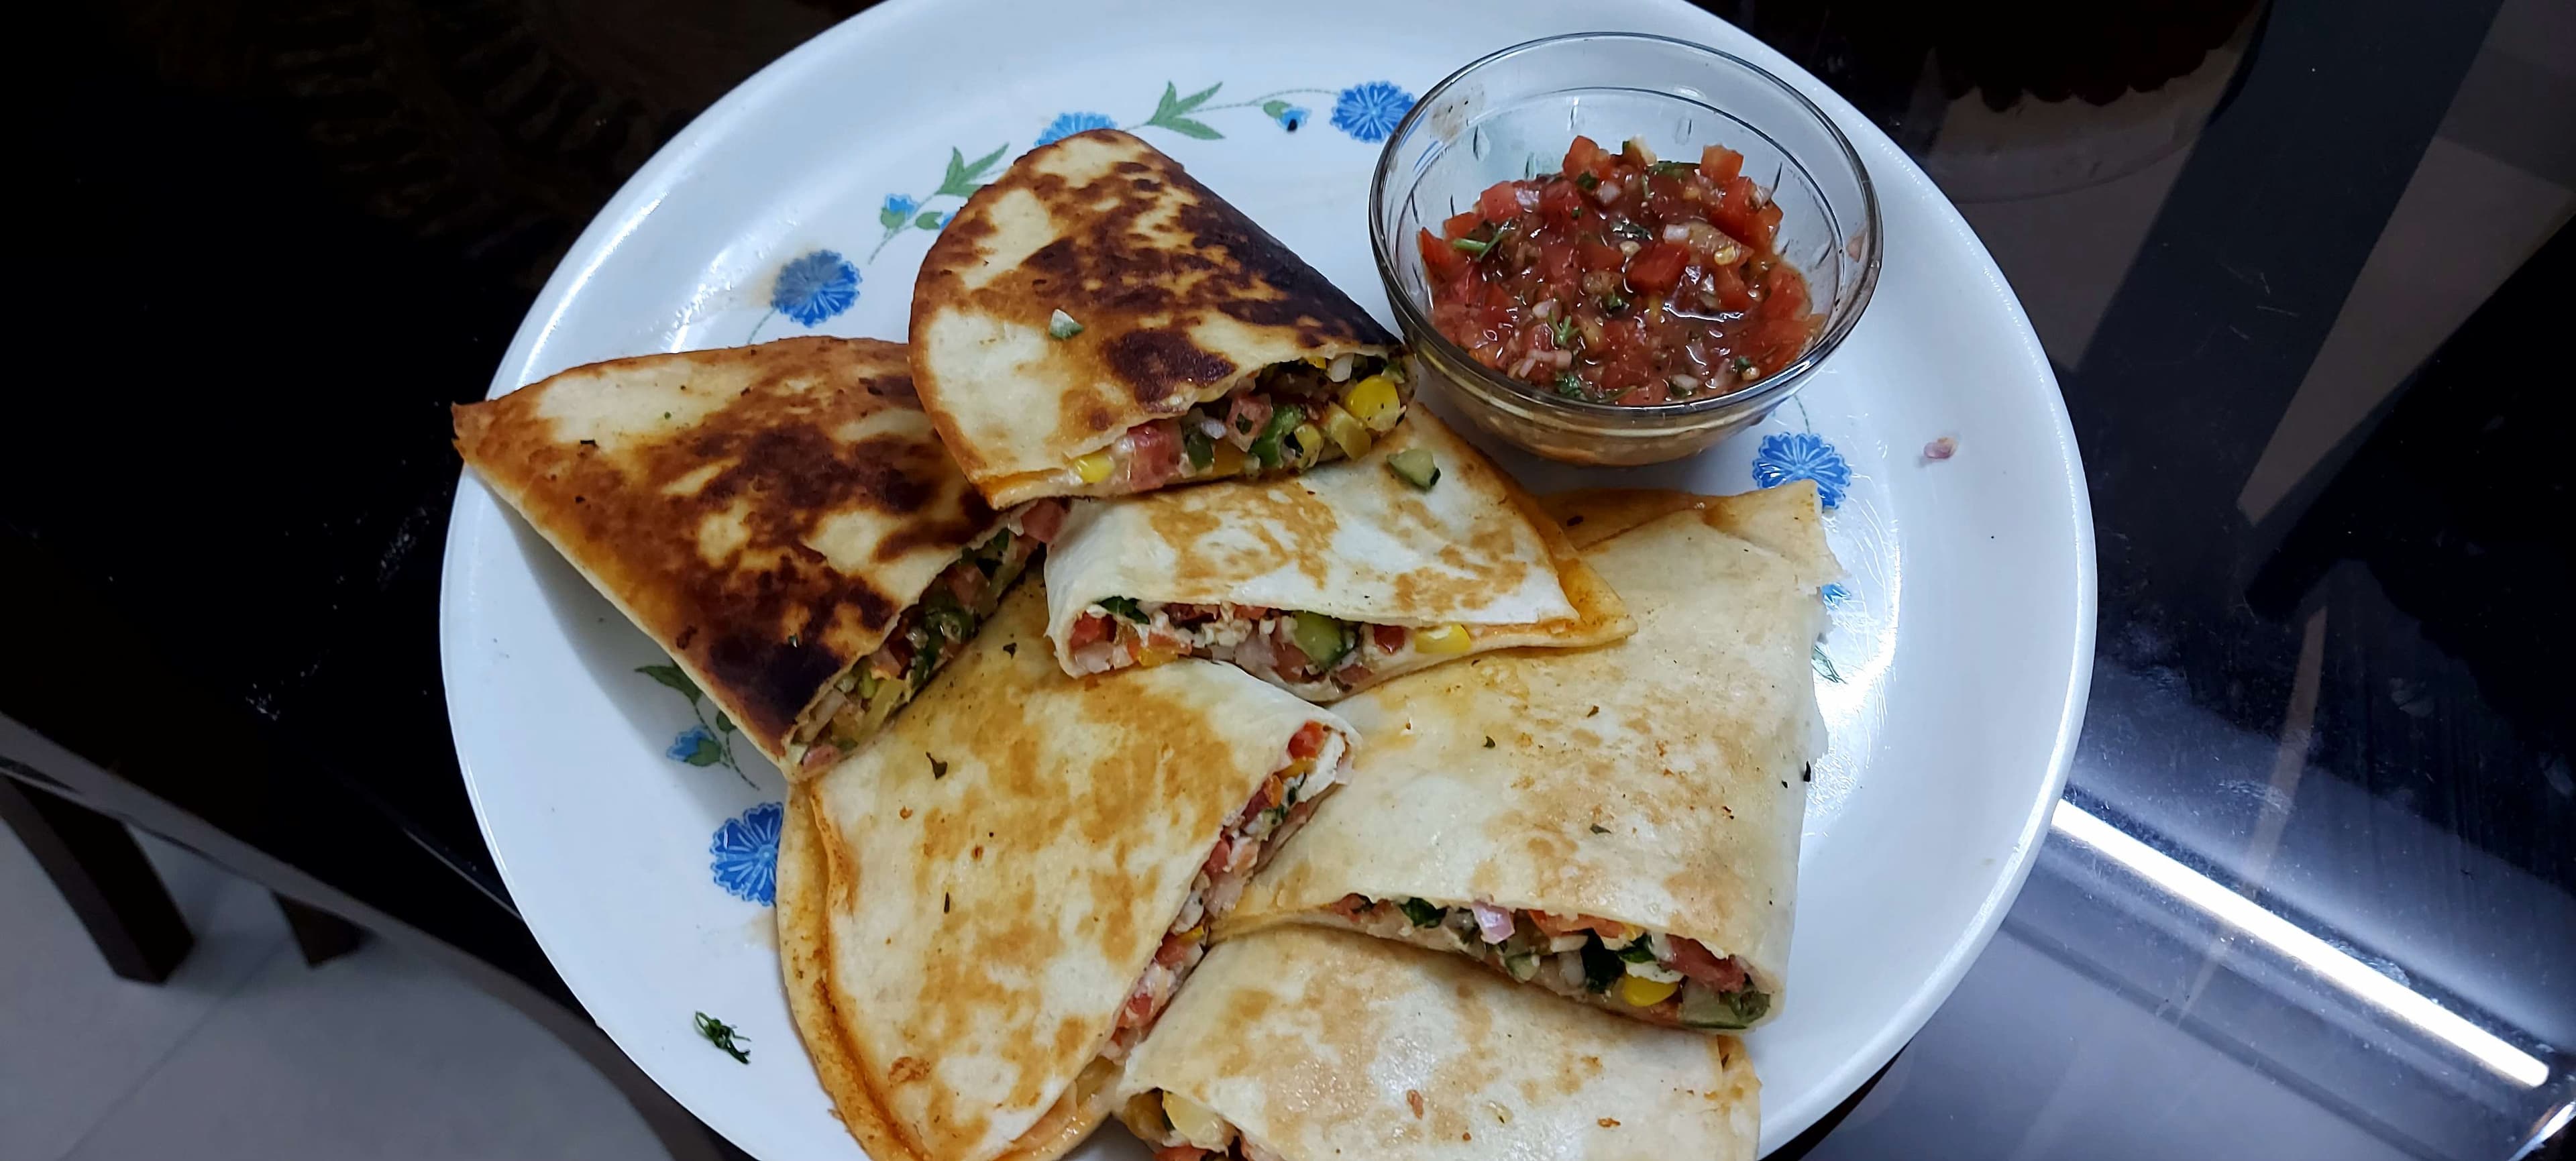 Delicious Veg Quesadillas prepared by COOX